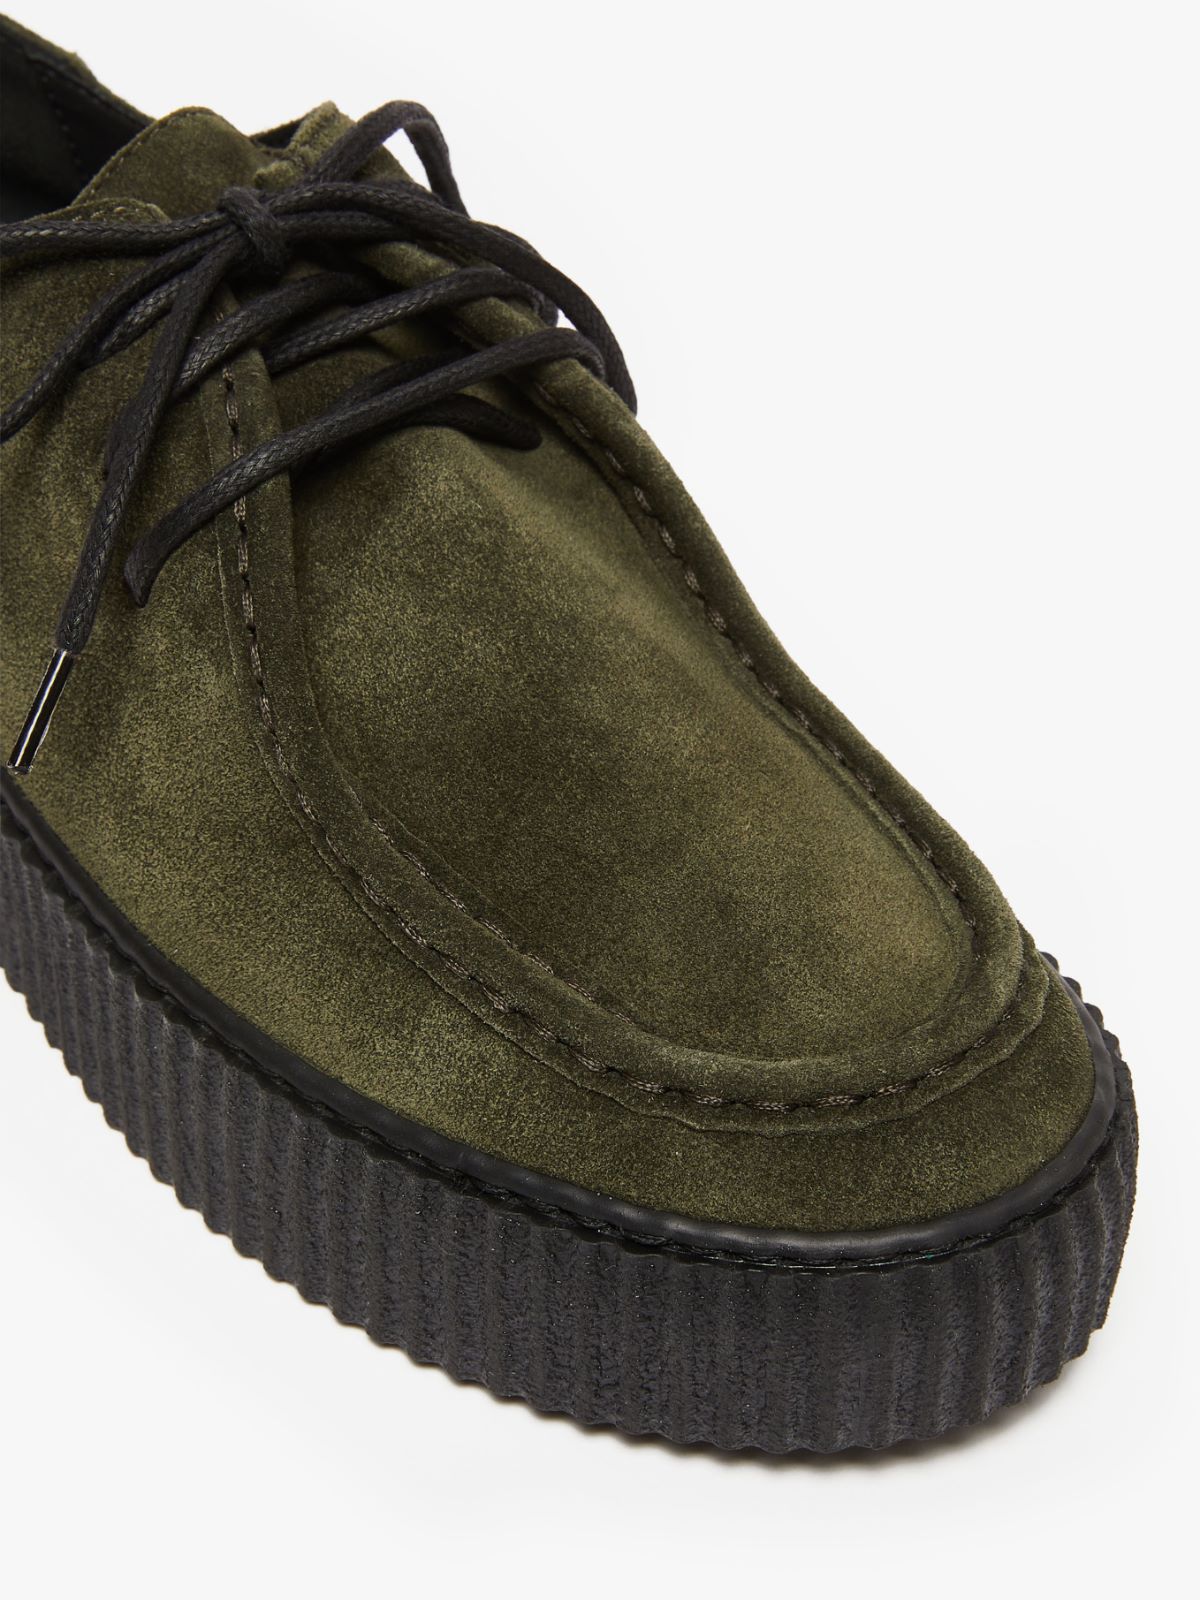 Crust leather ankle boots - DARK GREEN - Weekend Max Mara - 4